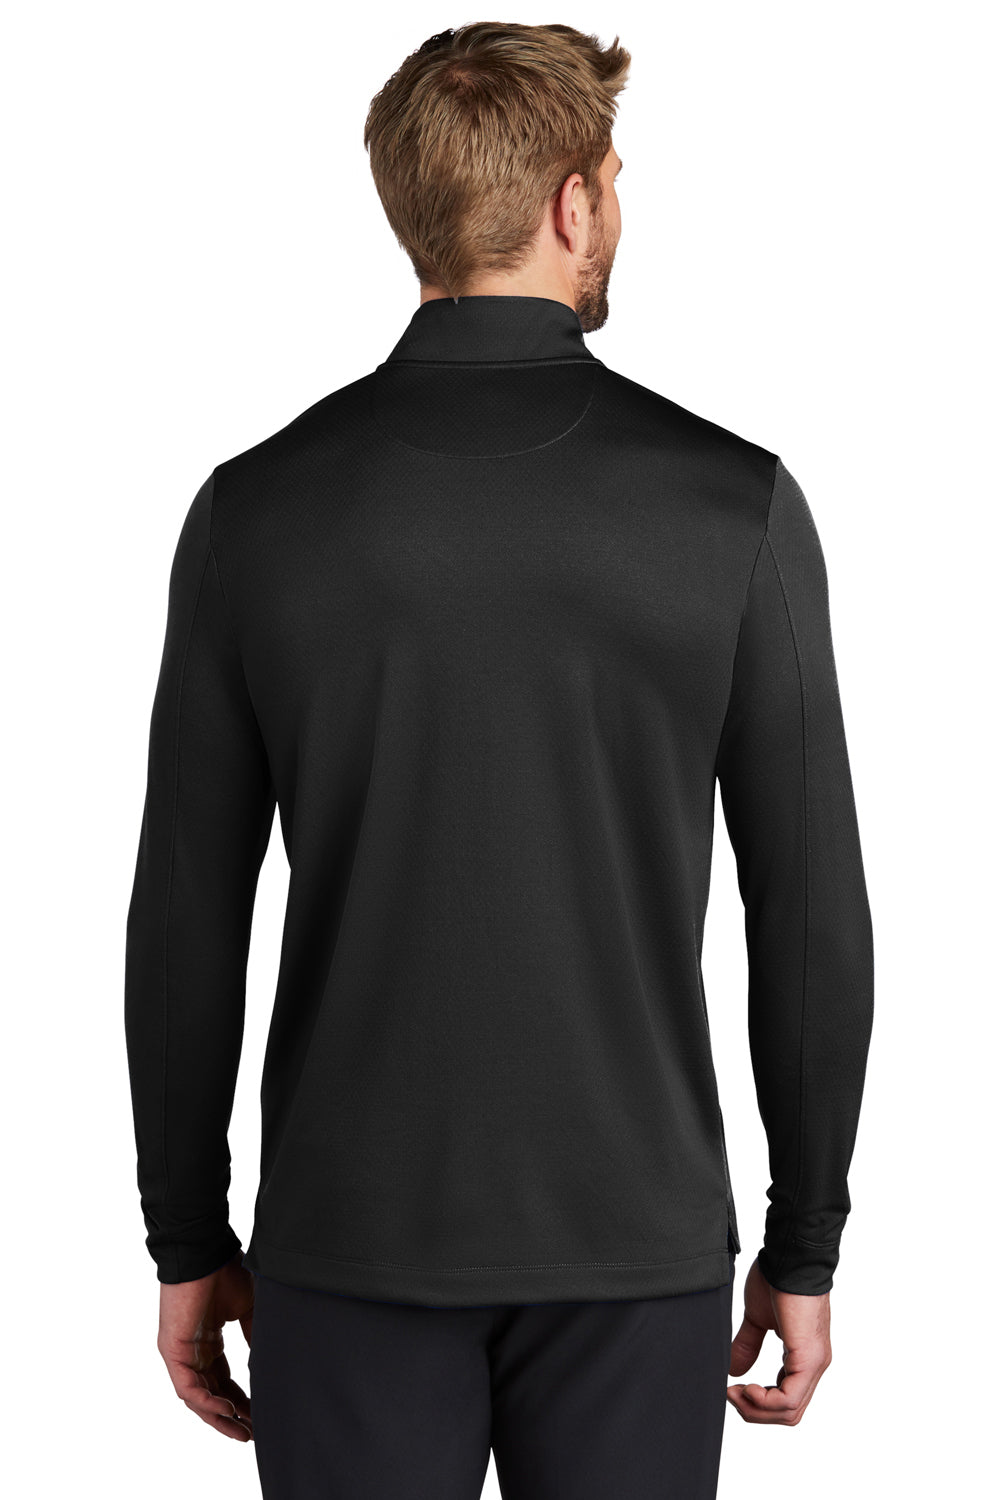 Nike NKBV6044 Mens Dri-Fit Moisture Wicking 1/4 Zip Sweatshirt Black Model Back